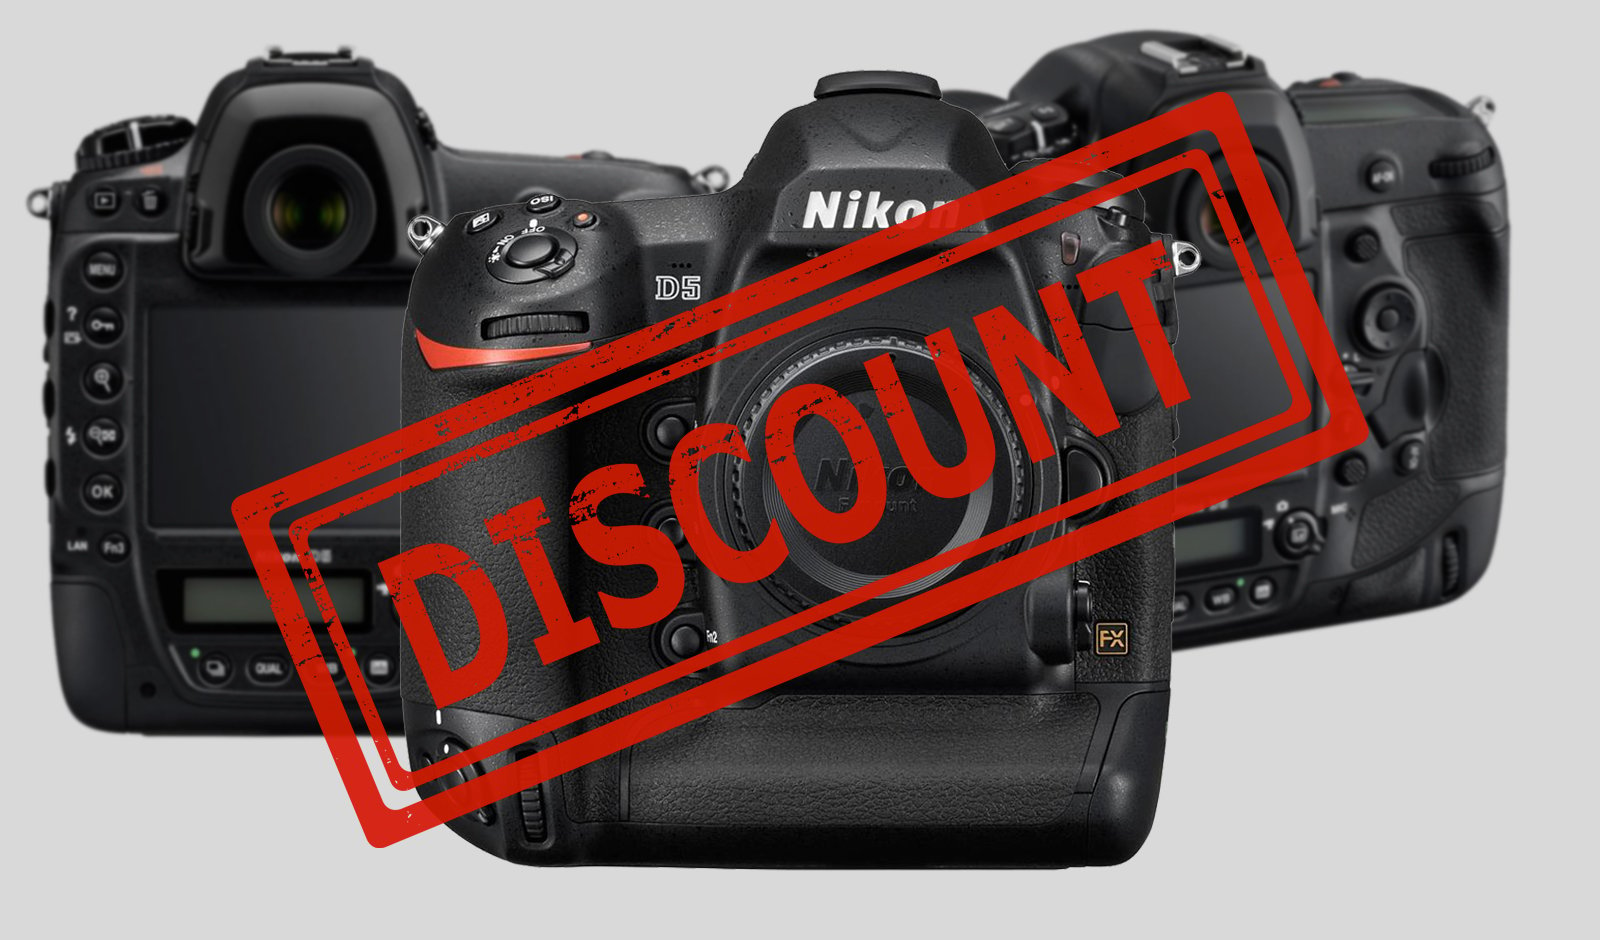 Deal Alert: The Nikon D5 is Now $1,000 Off